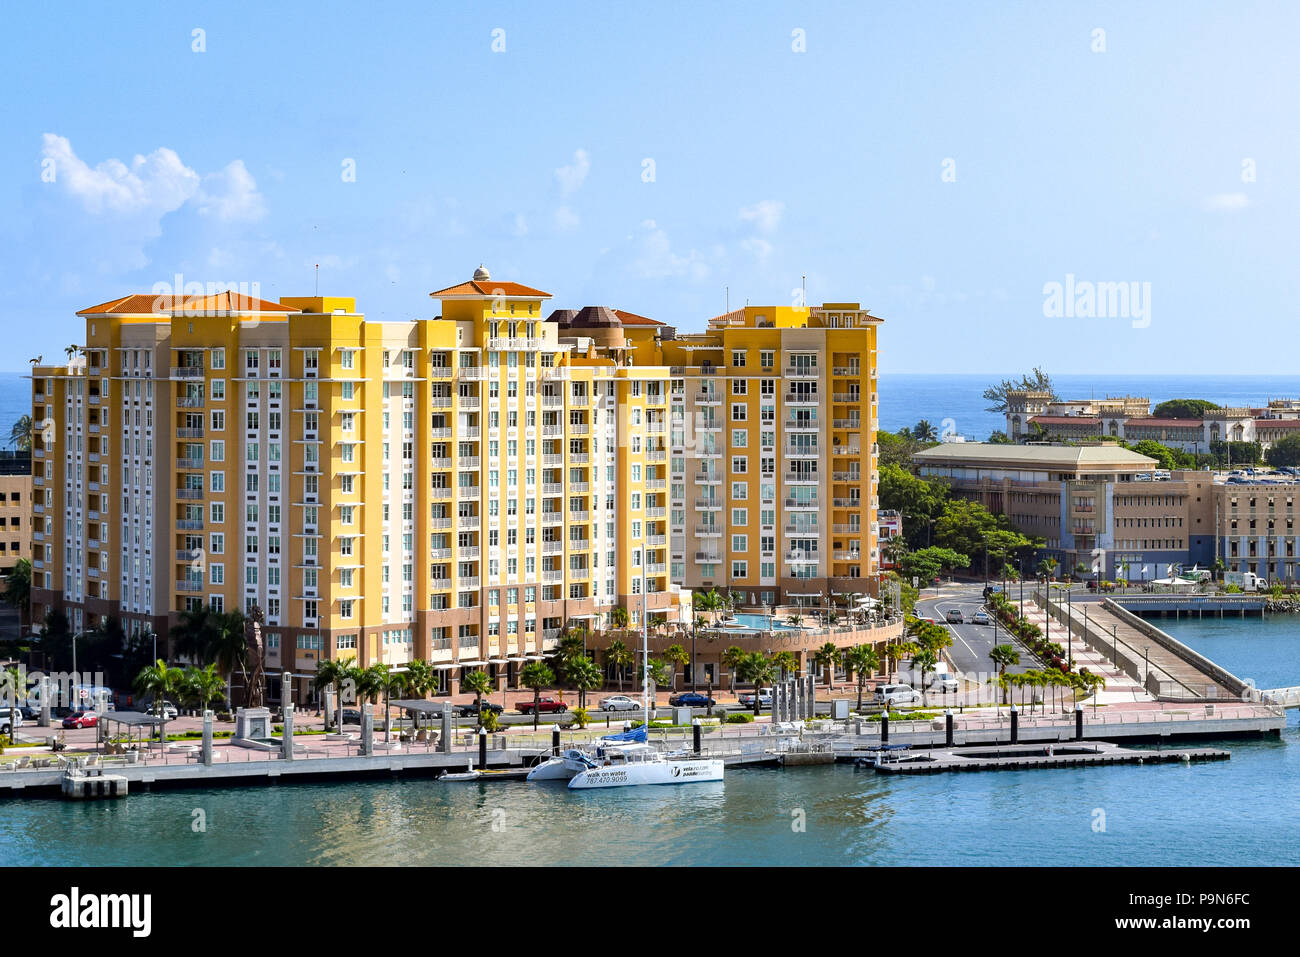 San Juan, Puerto Rico - April 02 2014: View of architecture along the coast in San Juan, Puerto Rico Stock Photo